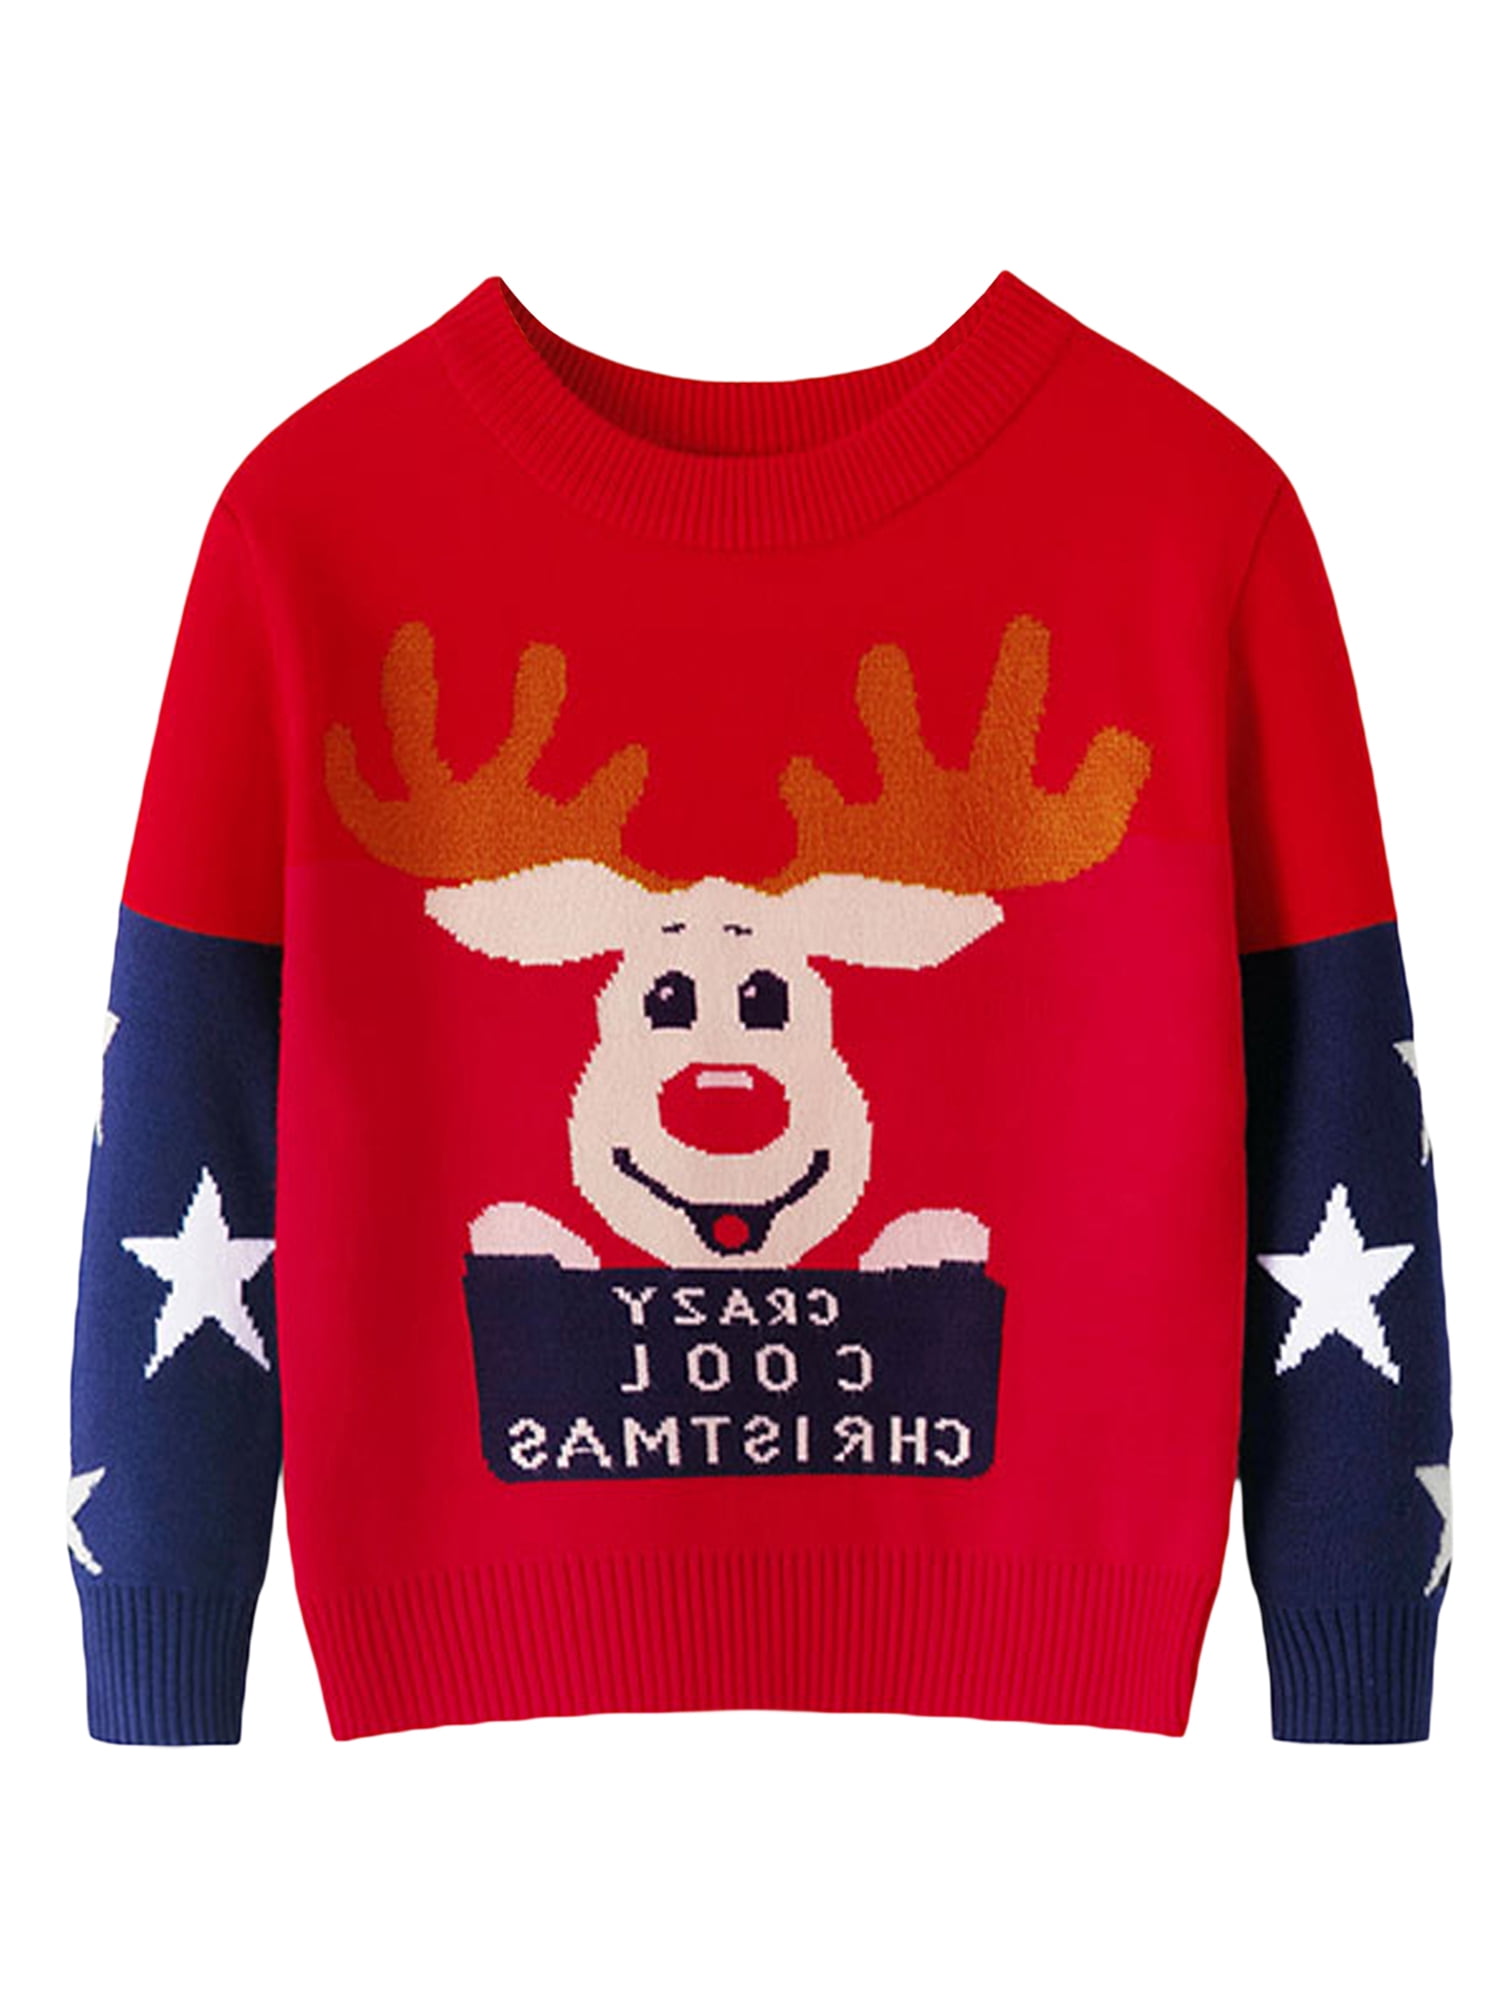 Baby Boys Sweatshirts Christmas Reindeer Fleece Crewneck Pullover Xmas Winter Warm Sweaters Tops 2t-6t 